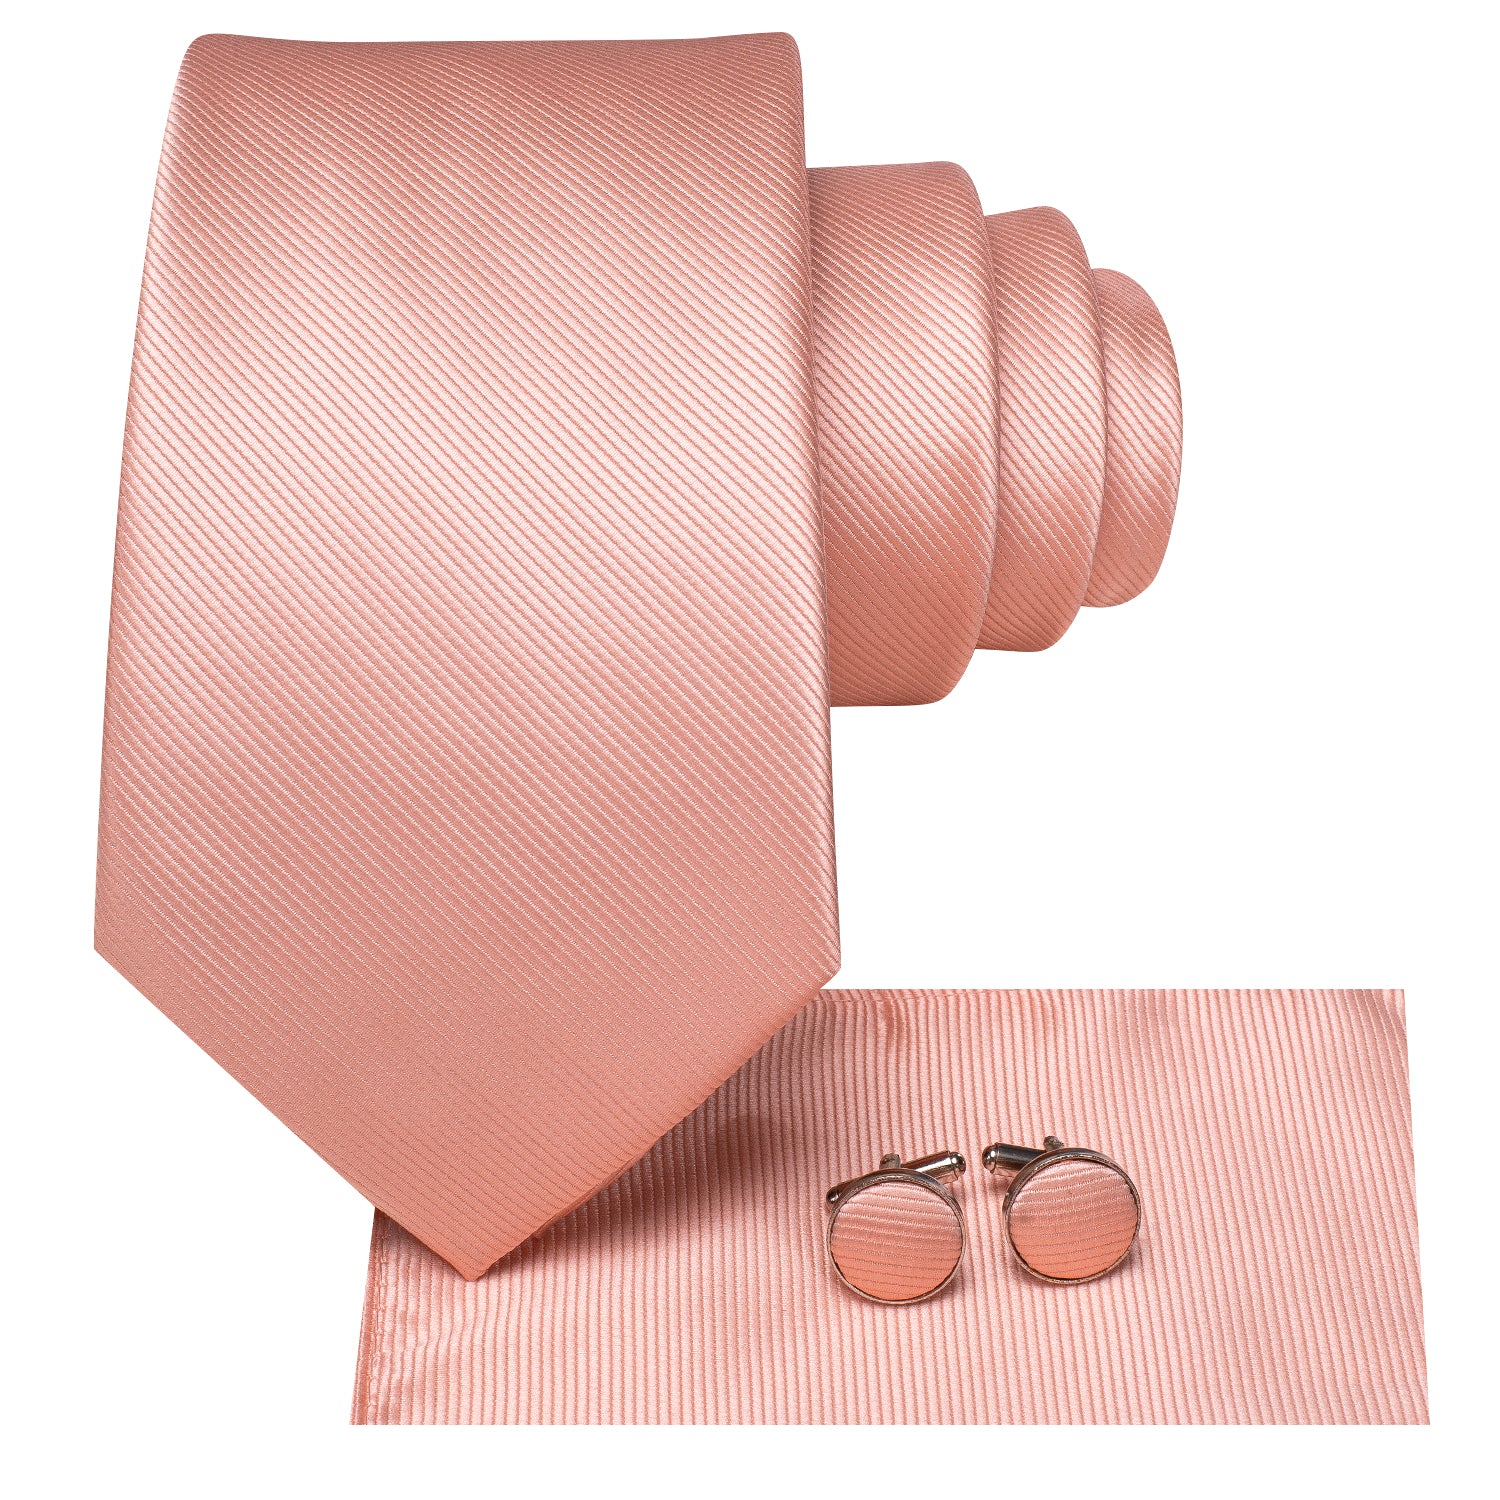 Coral Pink Solid Tie Pocket Square Cufflinks Set